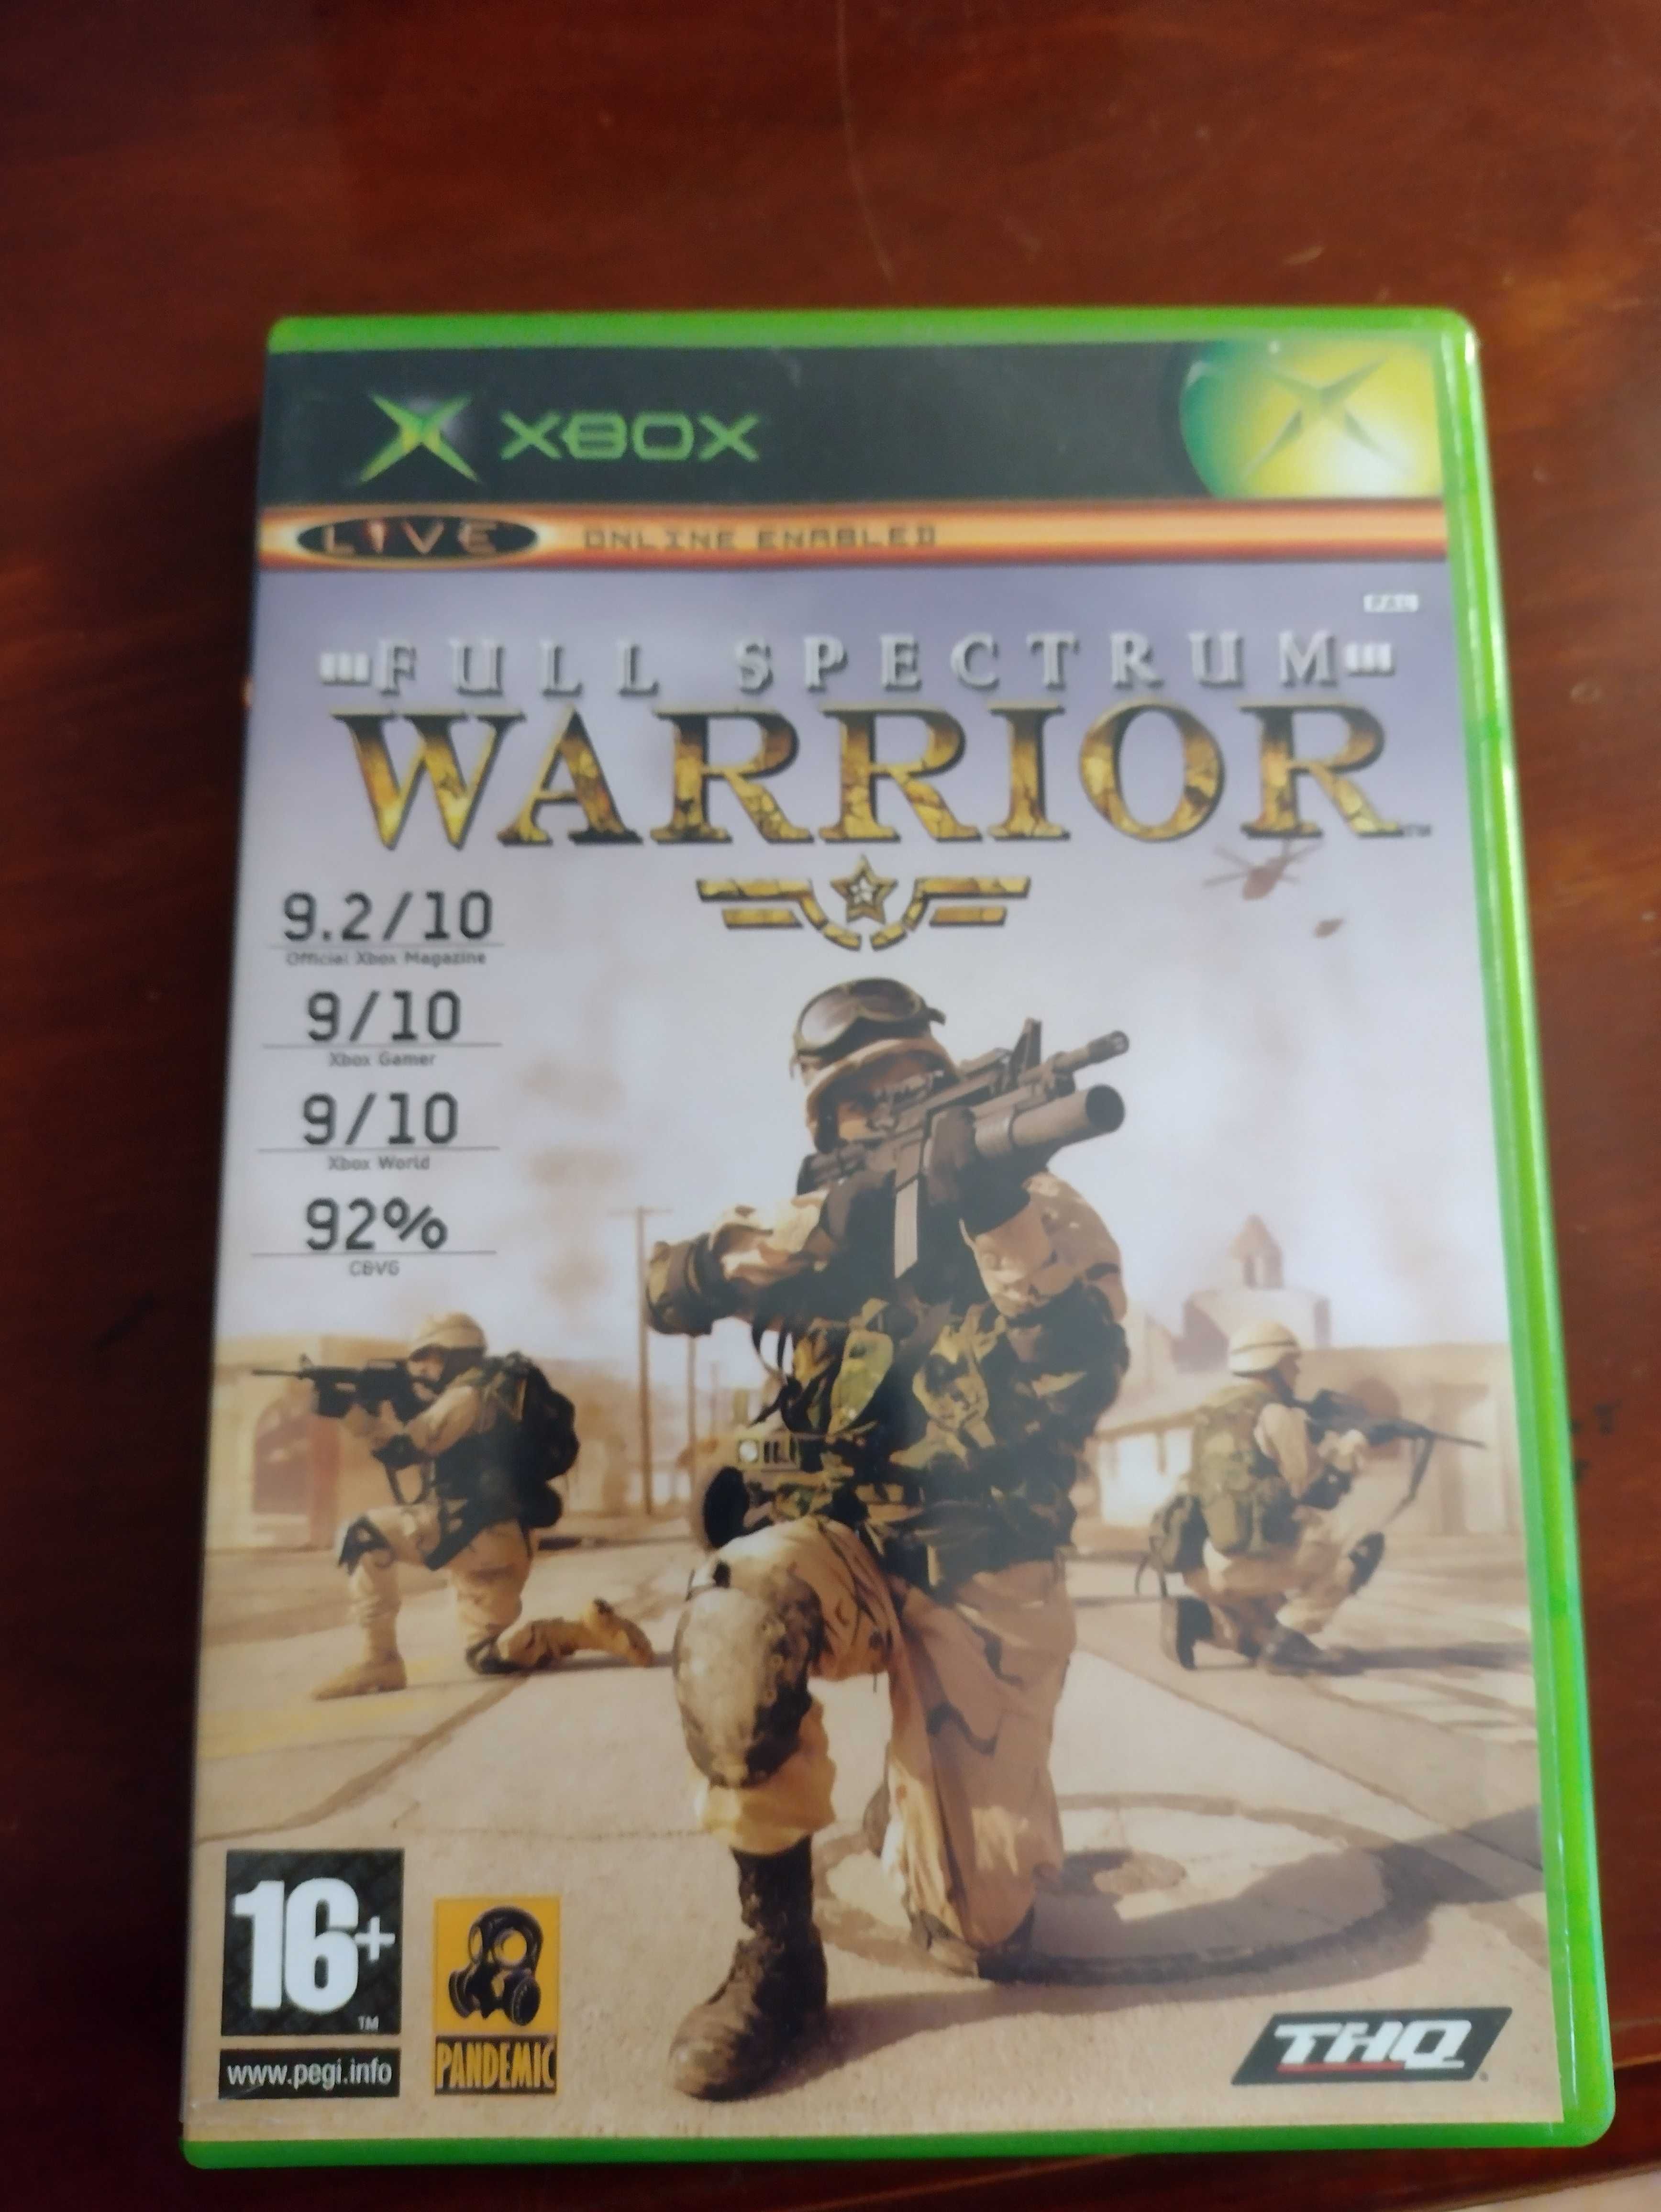 Full Spectrum Warrior - XBOX